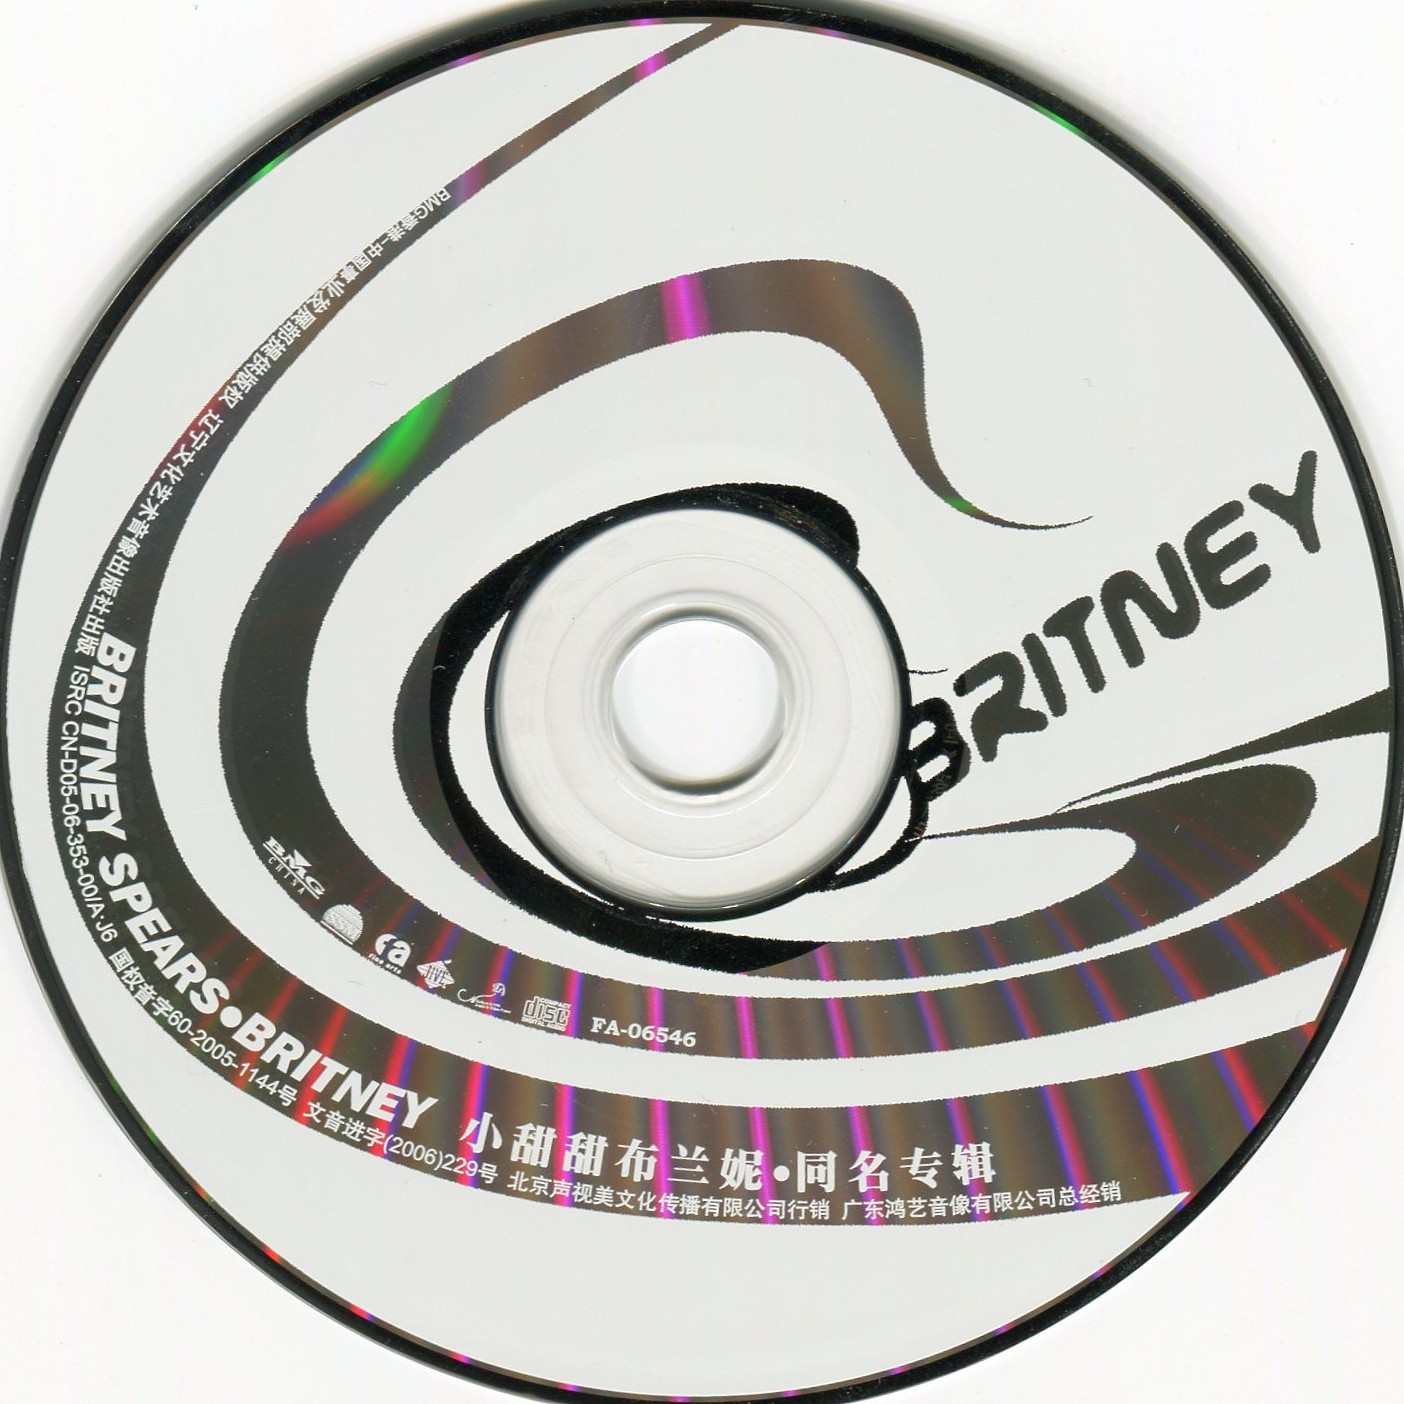 britney-britney-chinese-re-release-2006.jpg